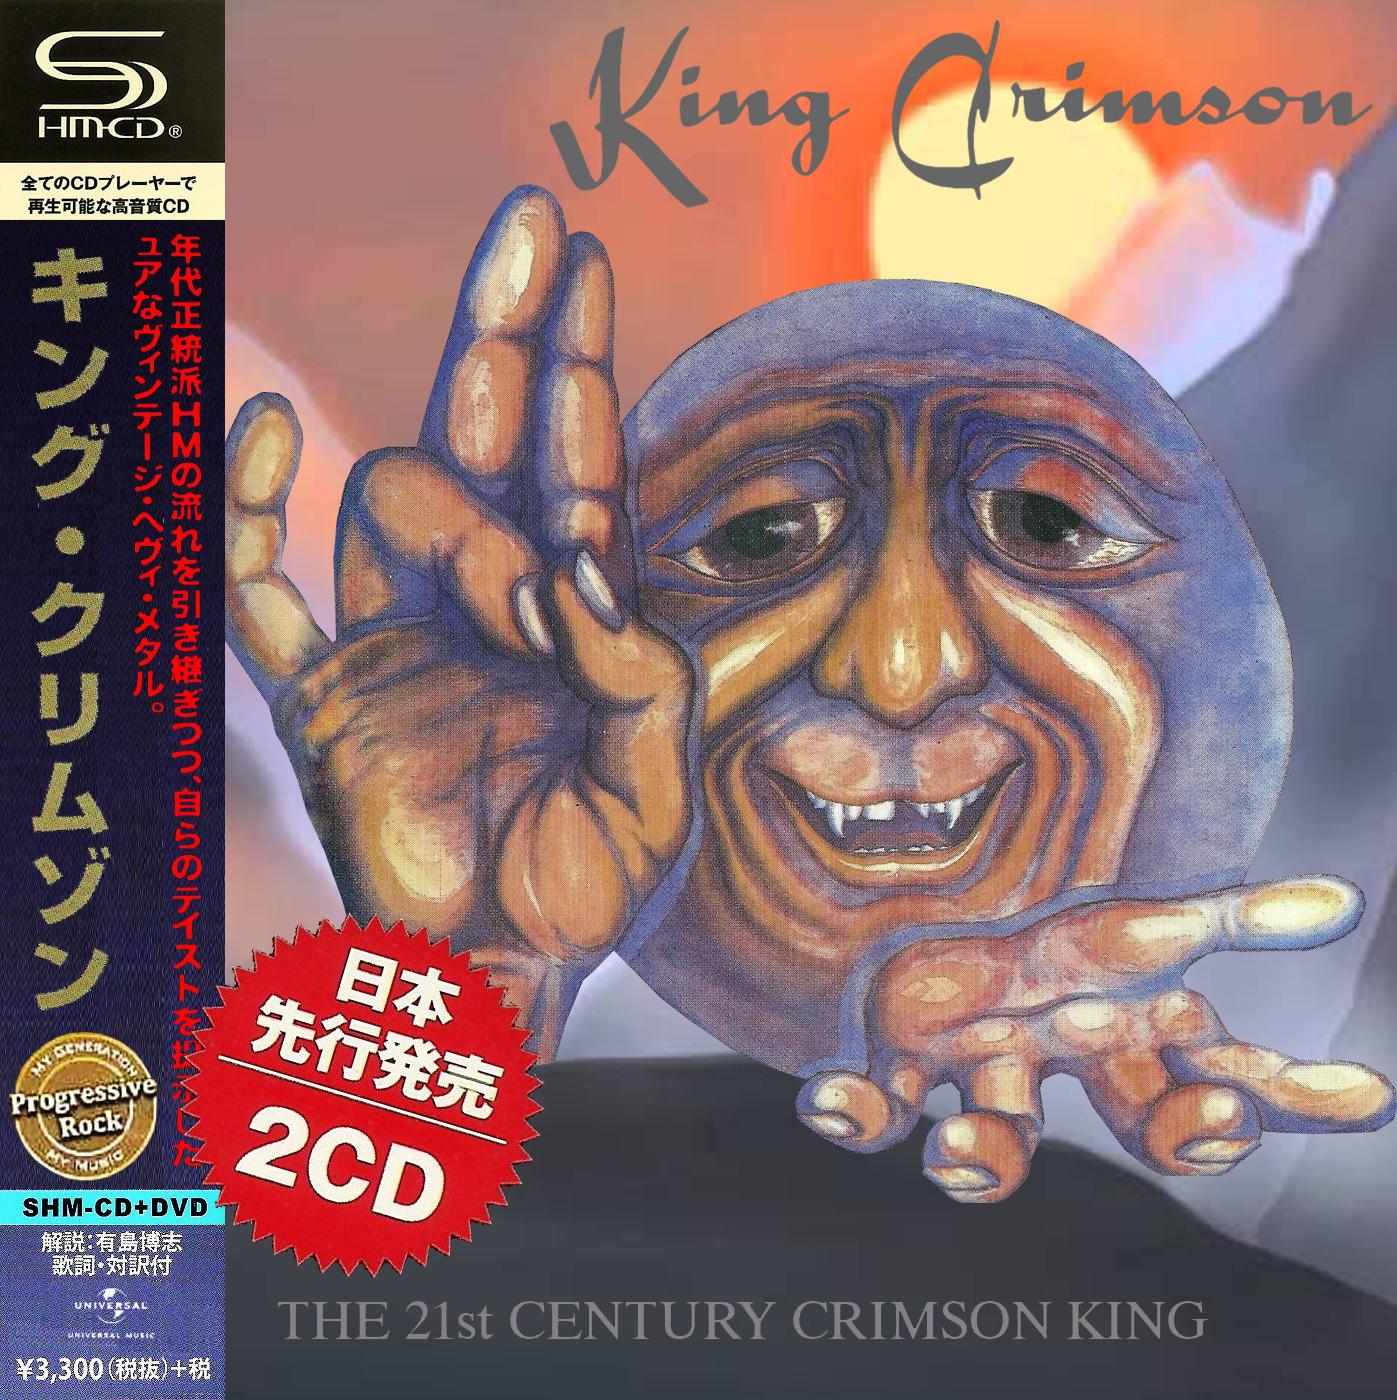 The 21st century Crimson King (CD X 2) Compilation - KING CRIMSON